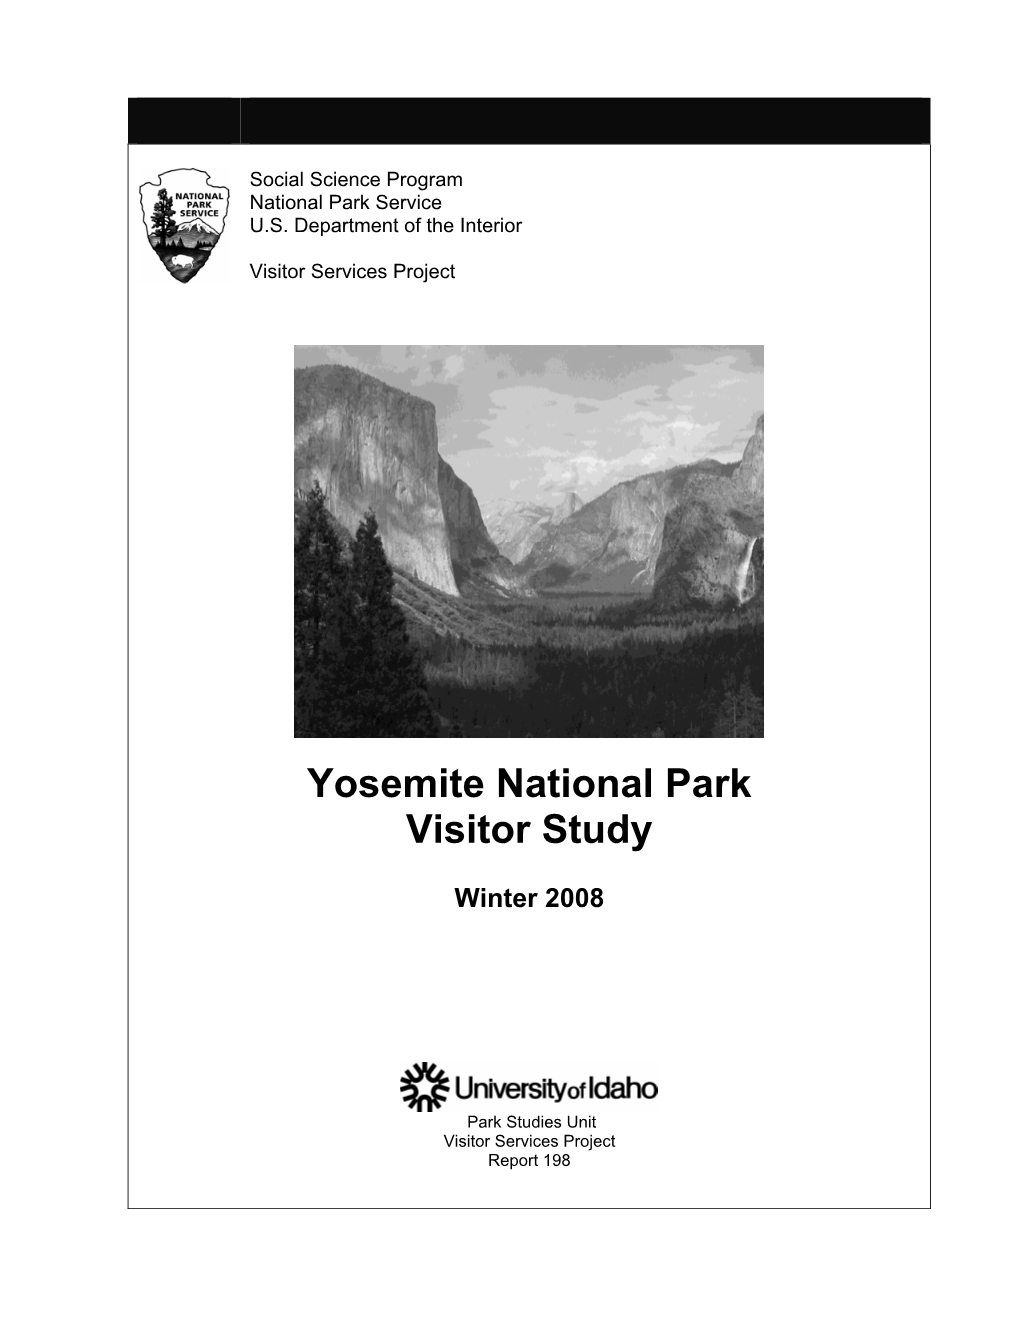 Yosemite National Park Visitor Study